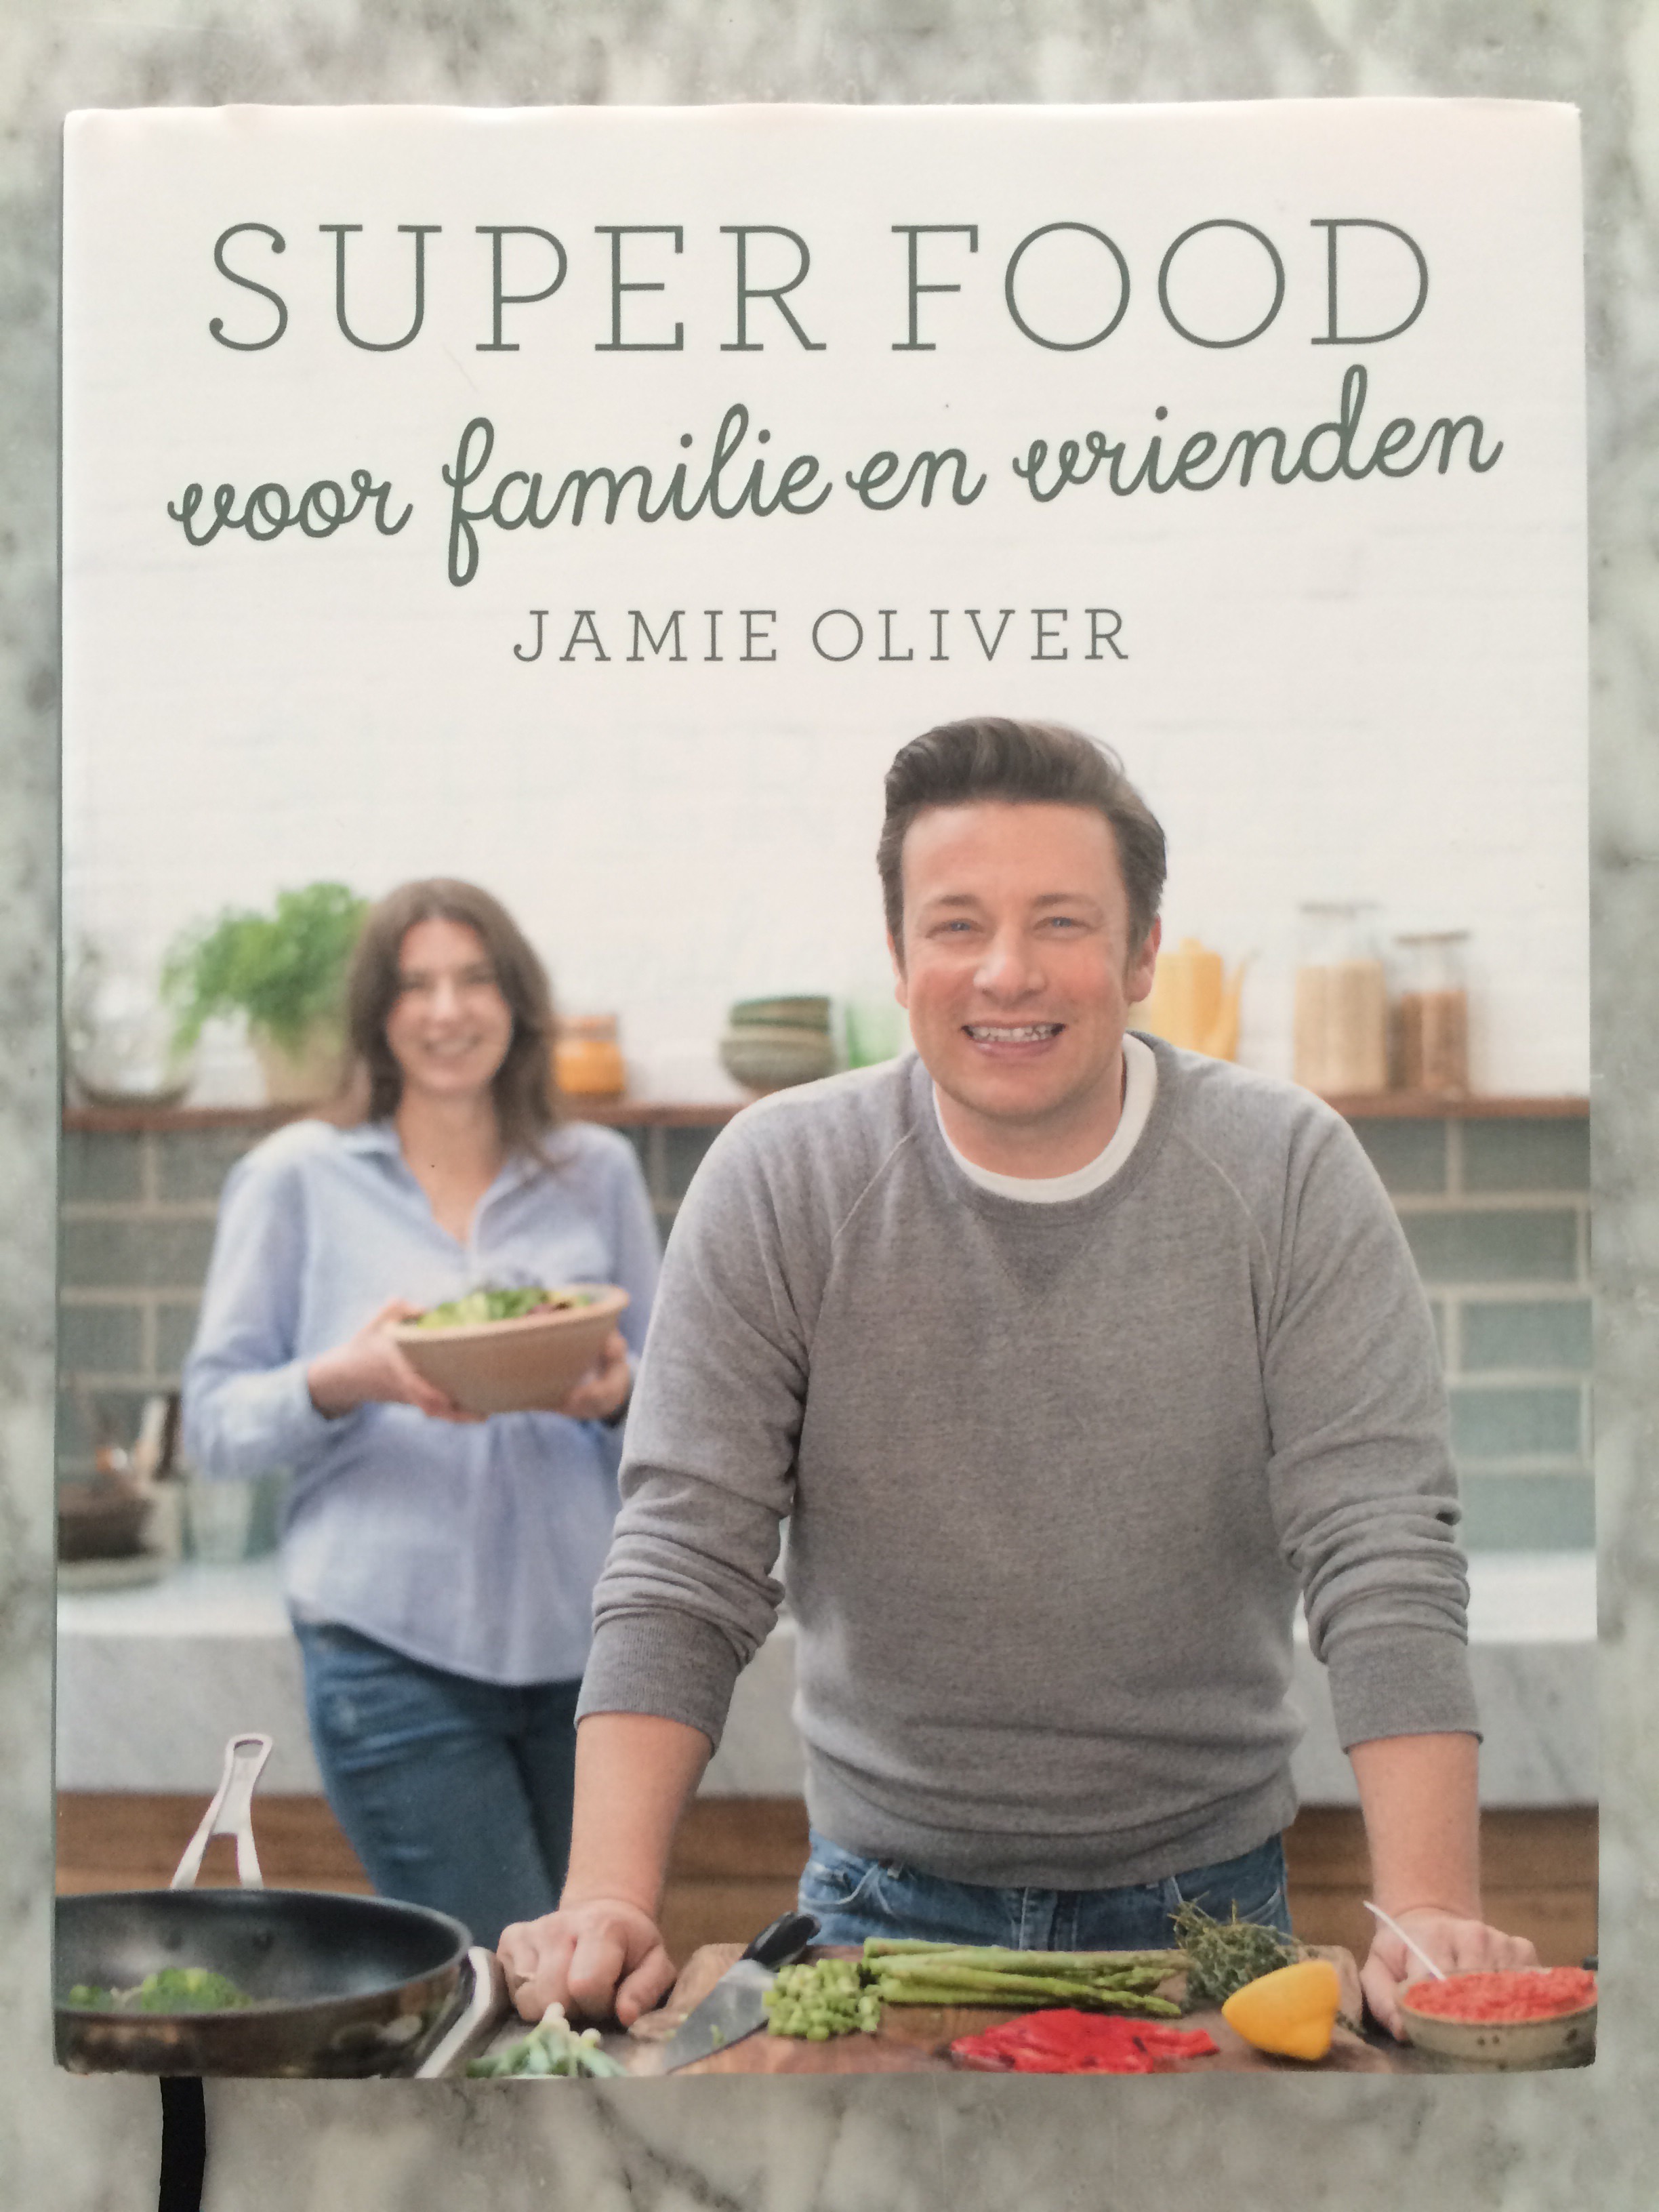 Jamie Oliver.jpg